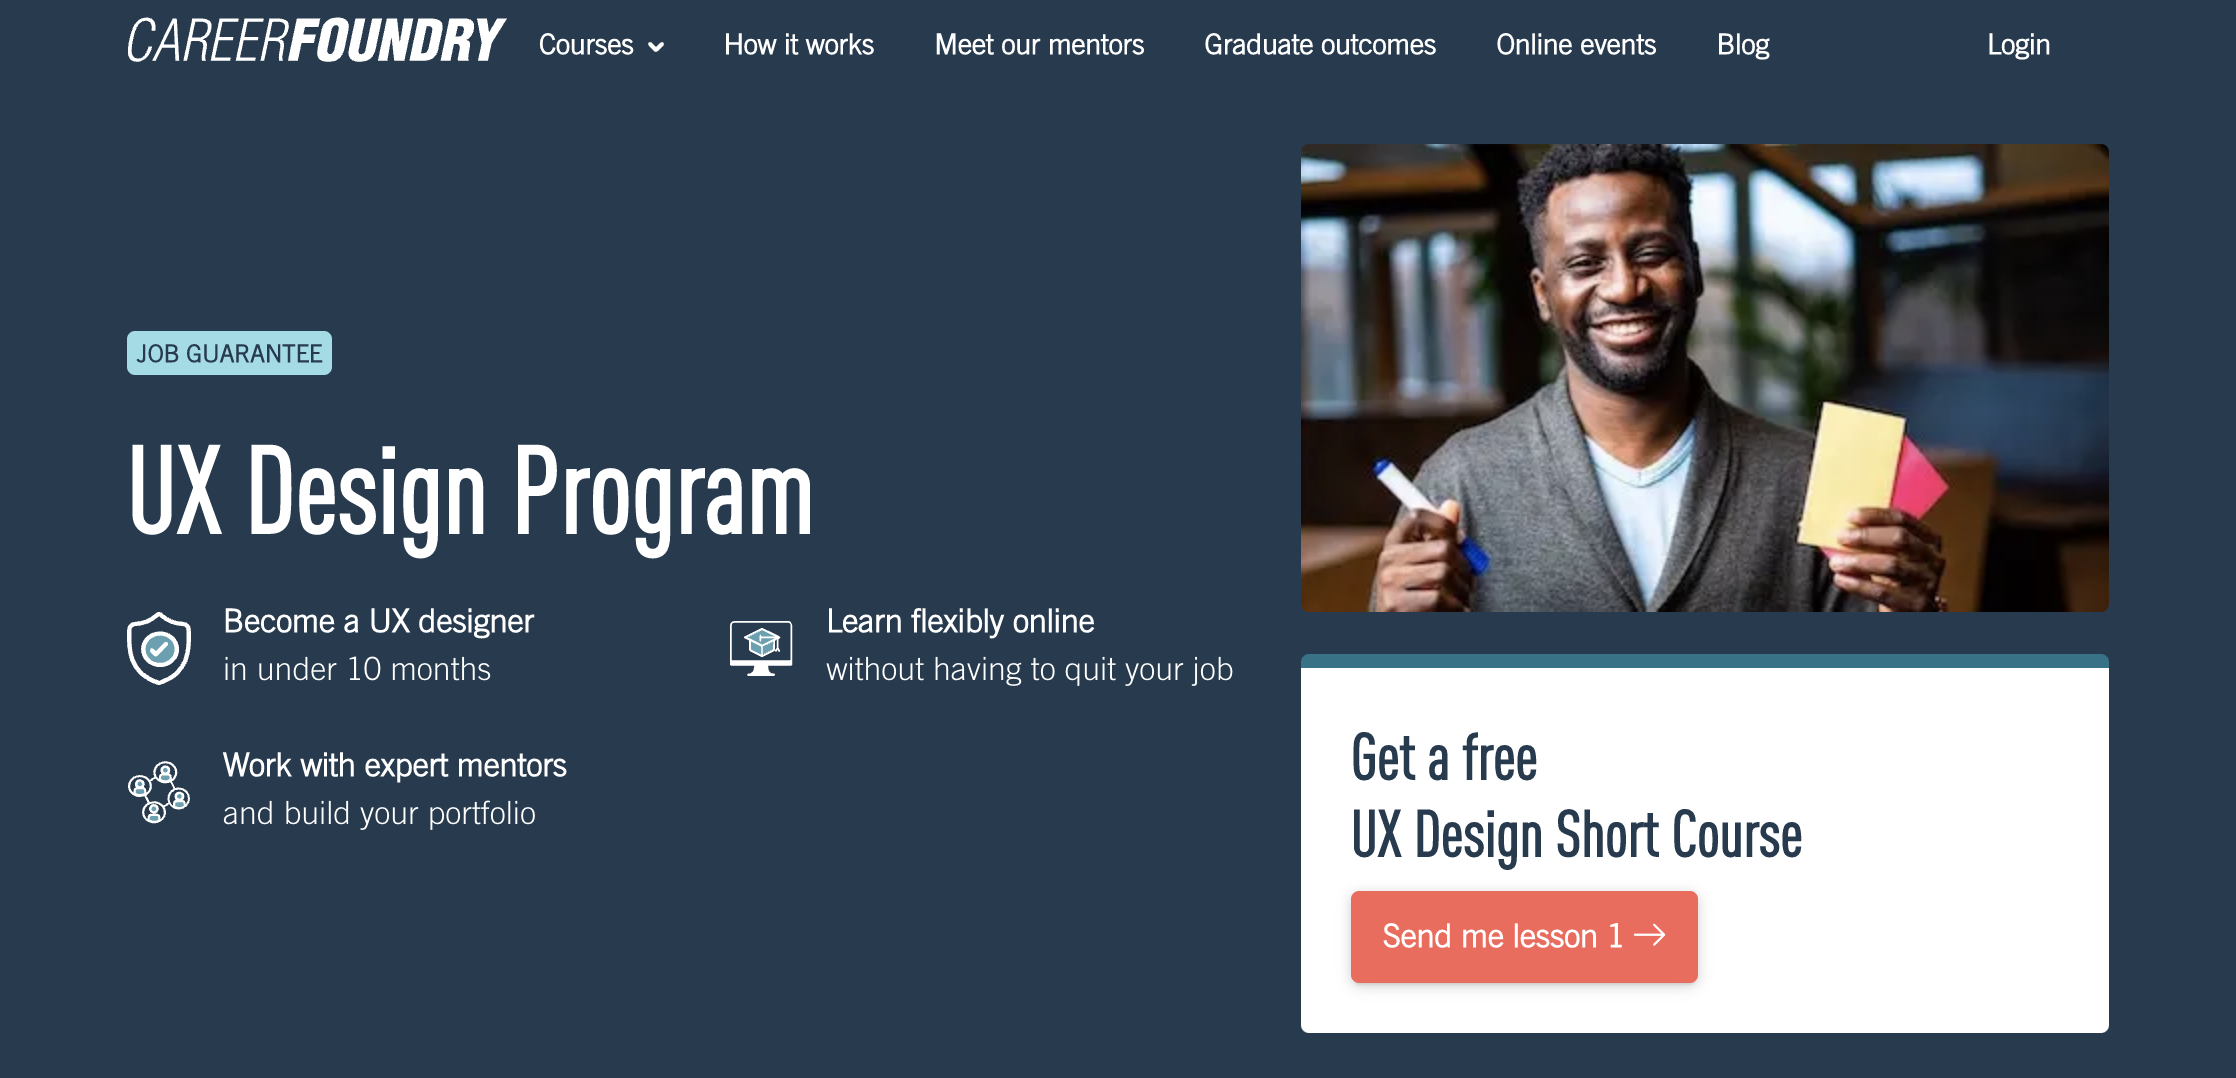 career foundry ux design program landing page 